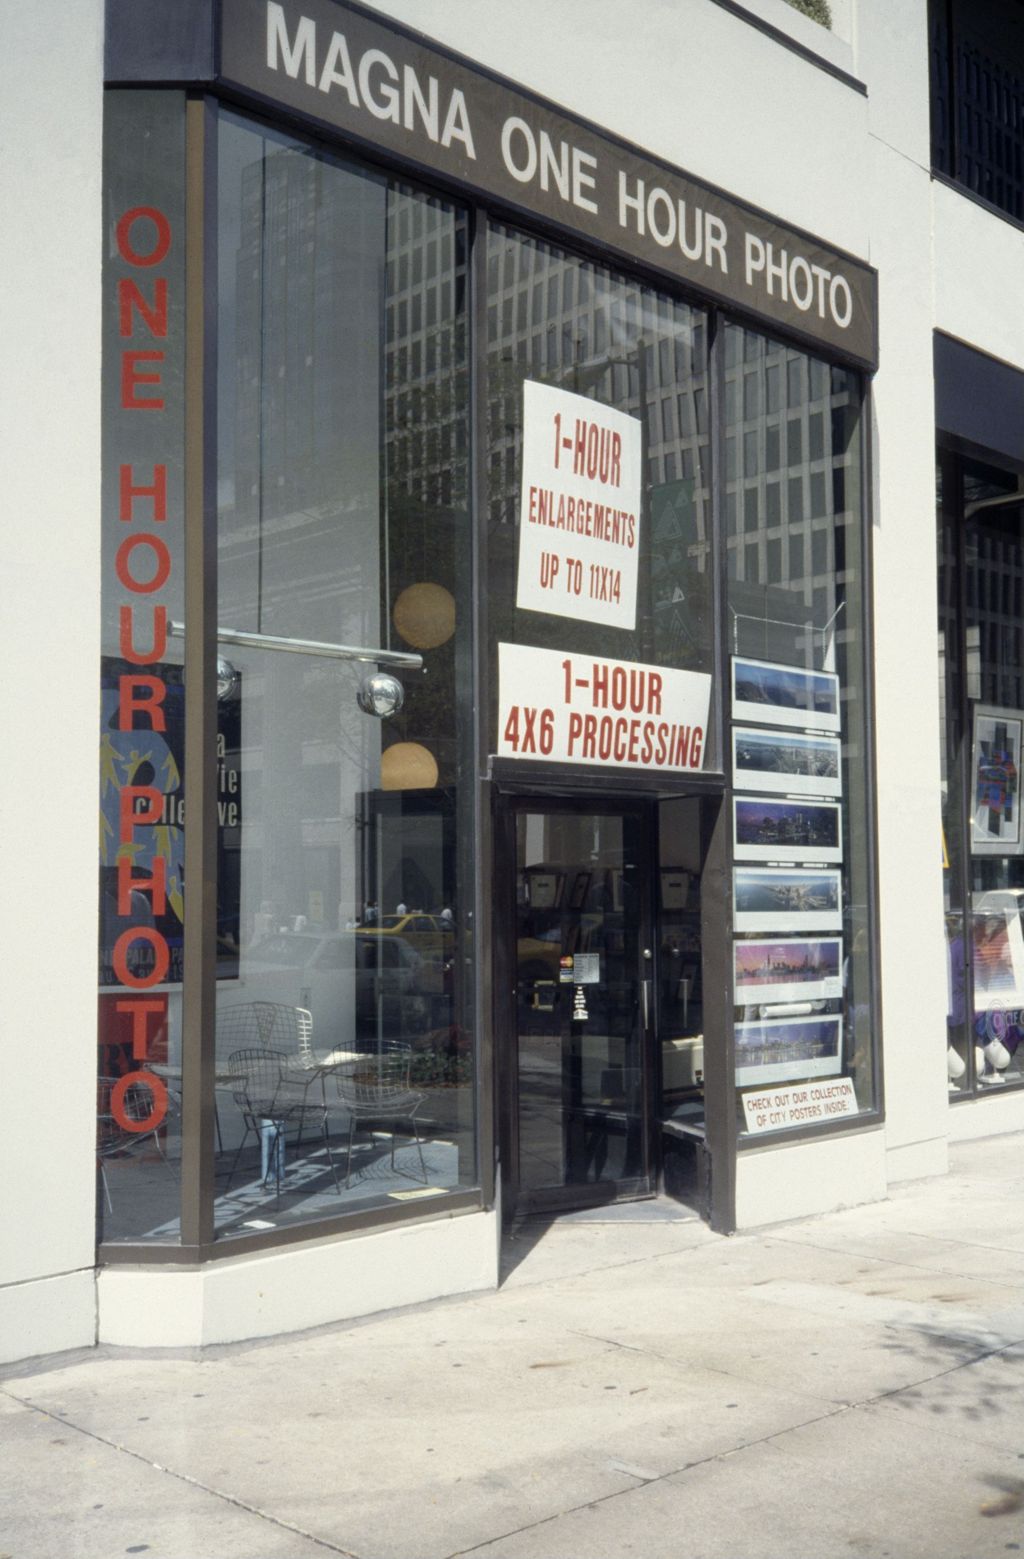 Miniature of Magna One Hour Photo shop, North Michigan Avenue